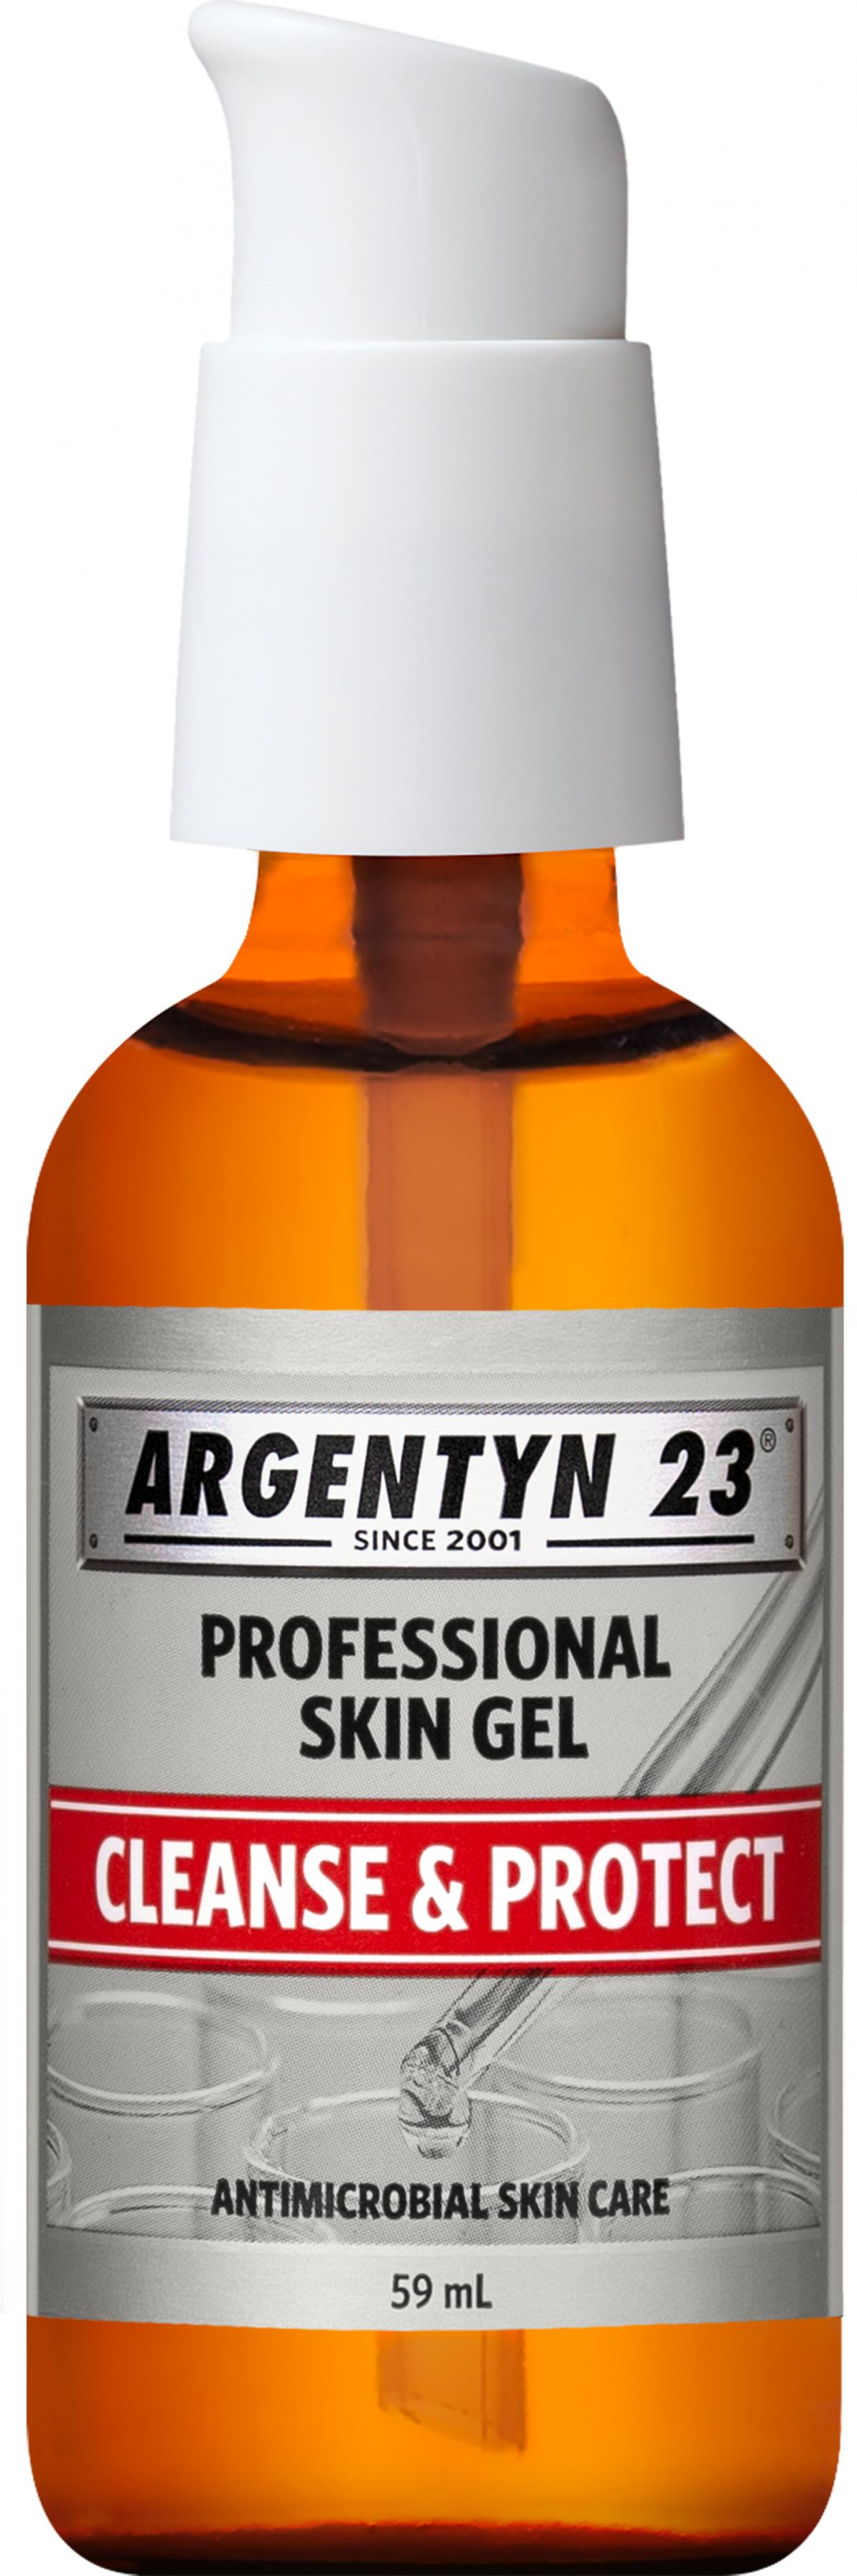 Argentyn Professional Skin Gel Cleanse & Protect 59ml